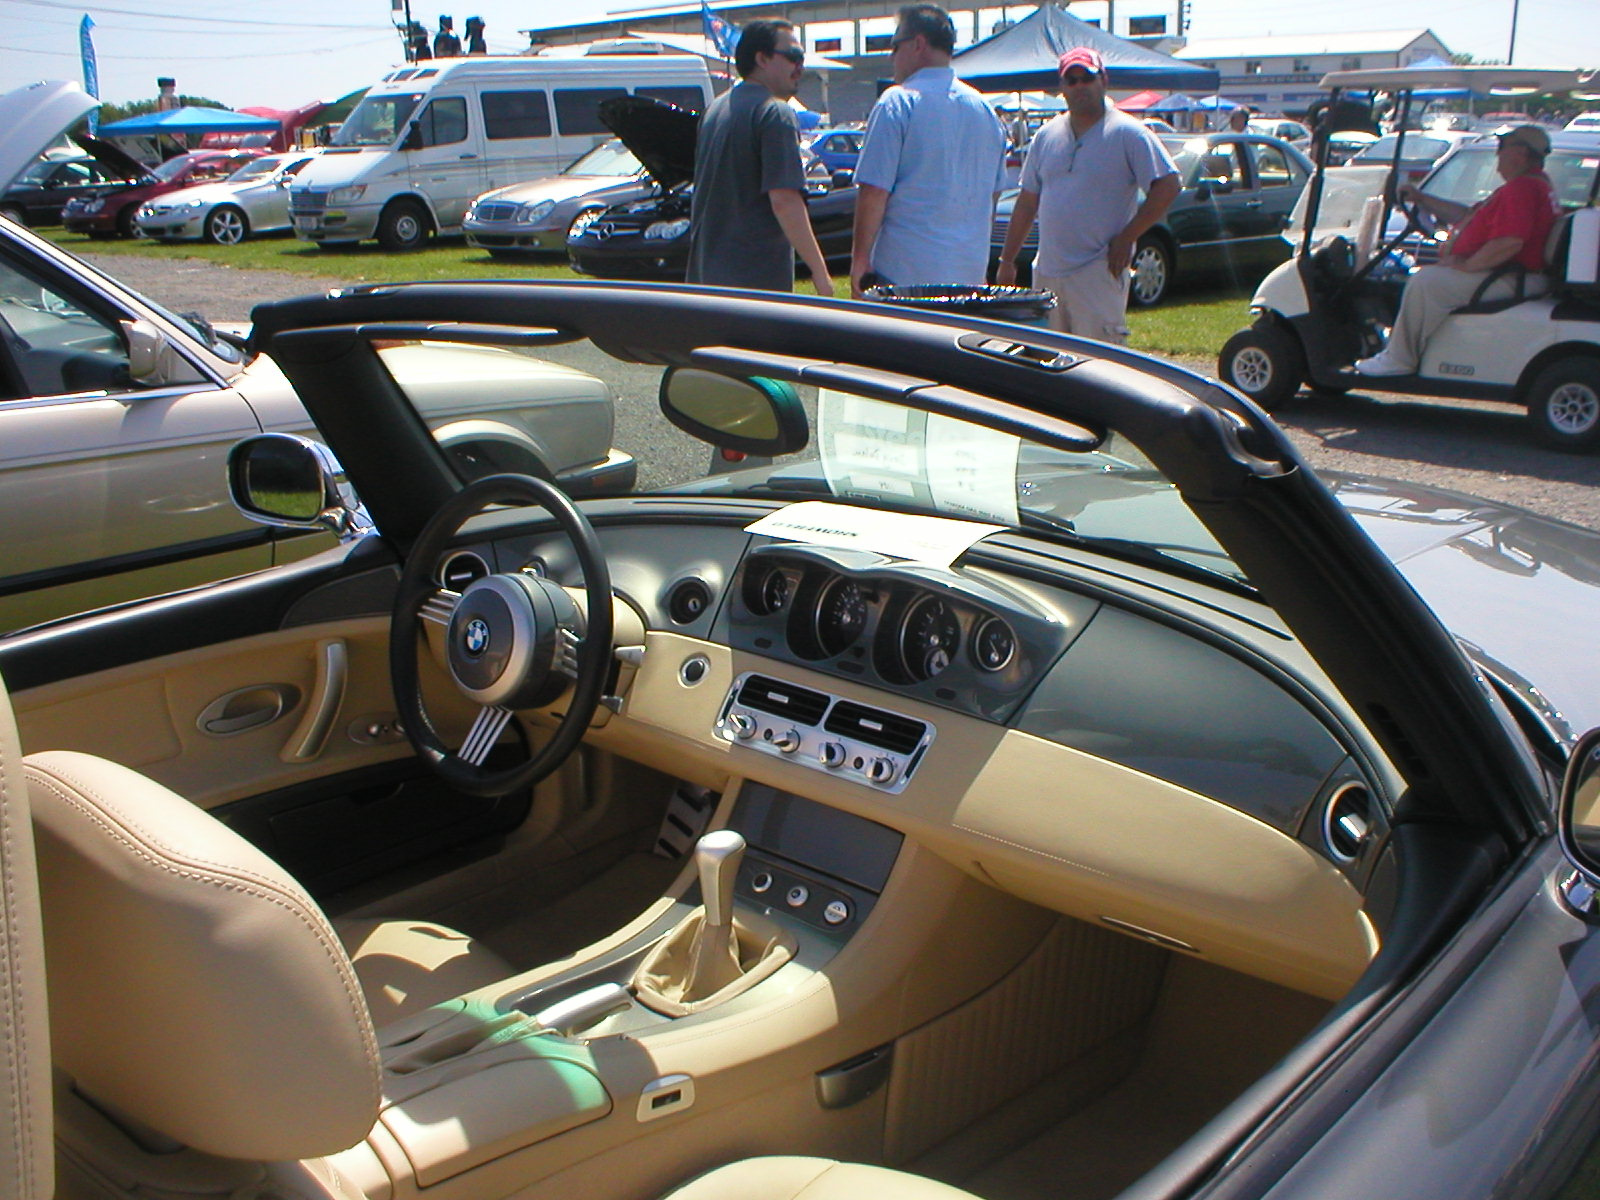 BMW Z8 interior | Flickr - Photo Sharing!